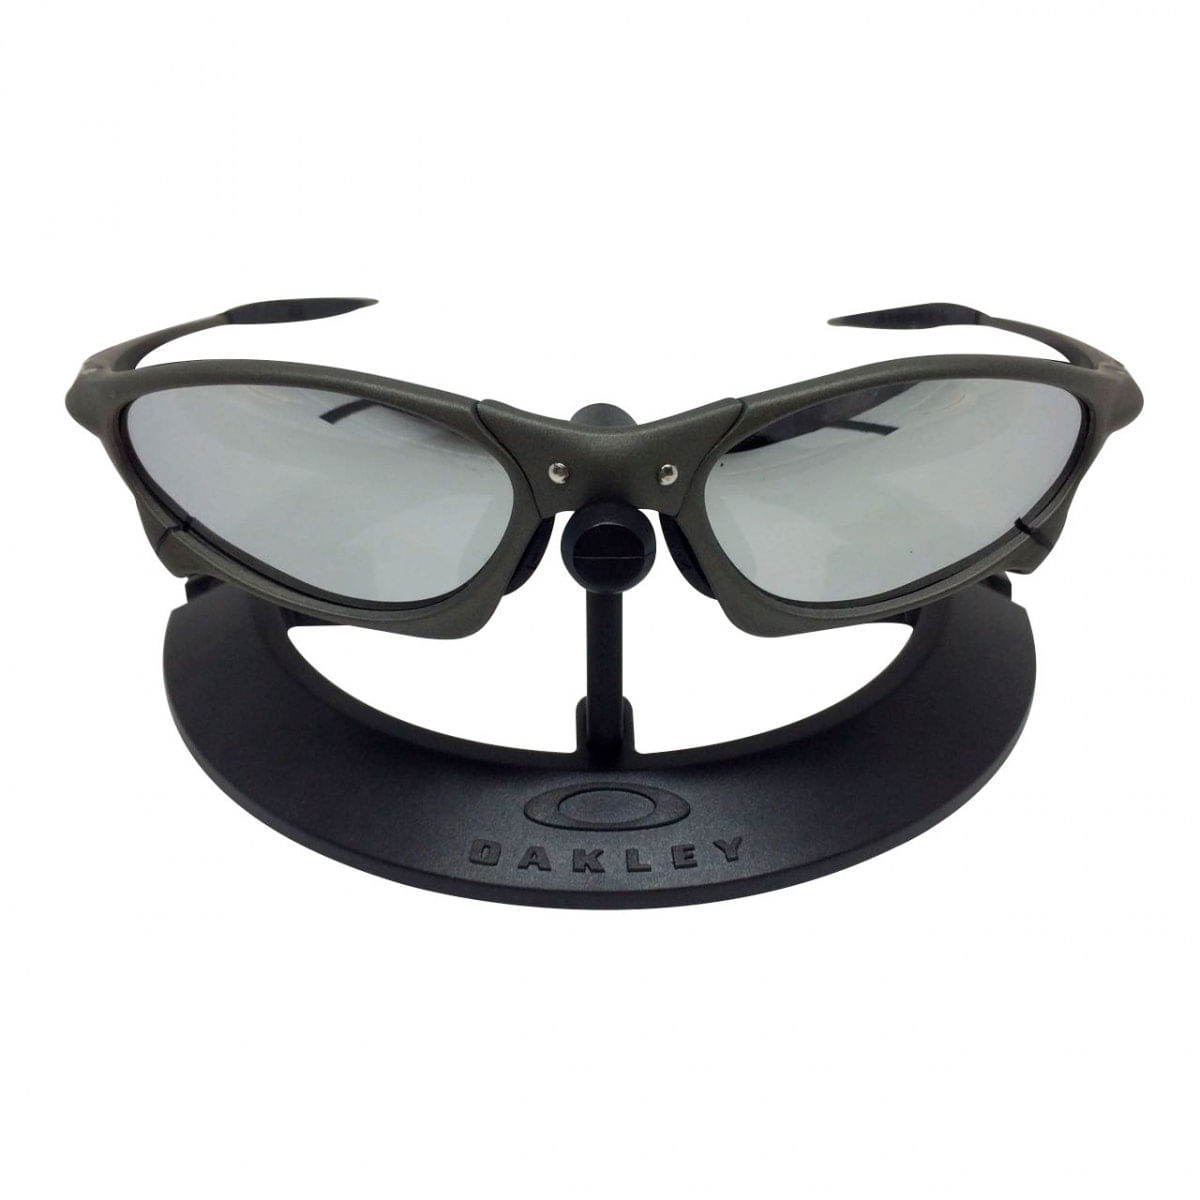 Oculos Doble X Juliet Xmetal Preta - Carrefour